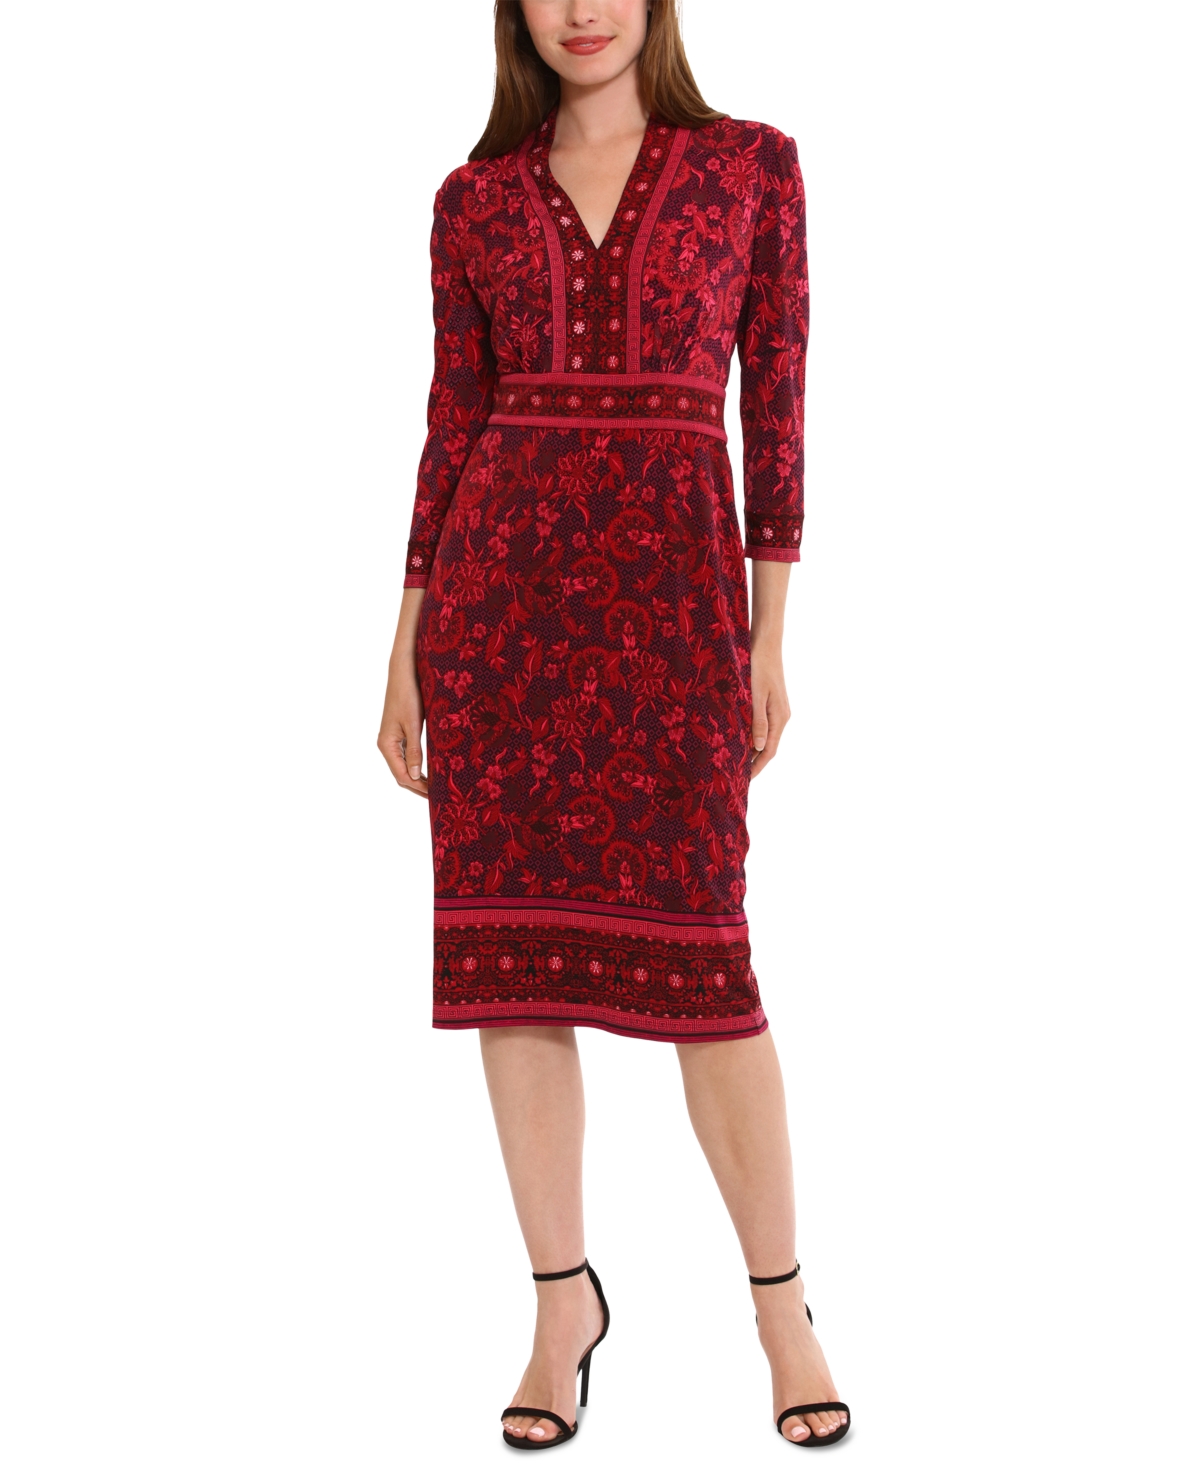 Women's Placed Print 3/4-Sleeve Jersey Sheath Dress - Wine/red